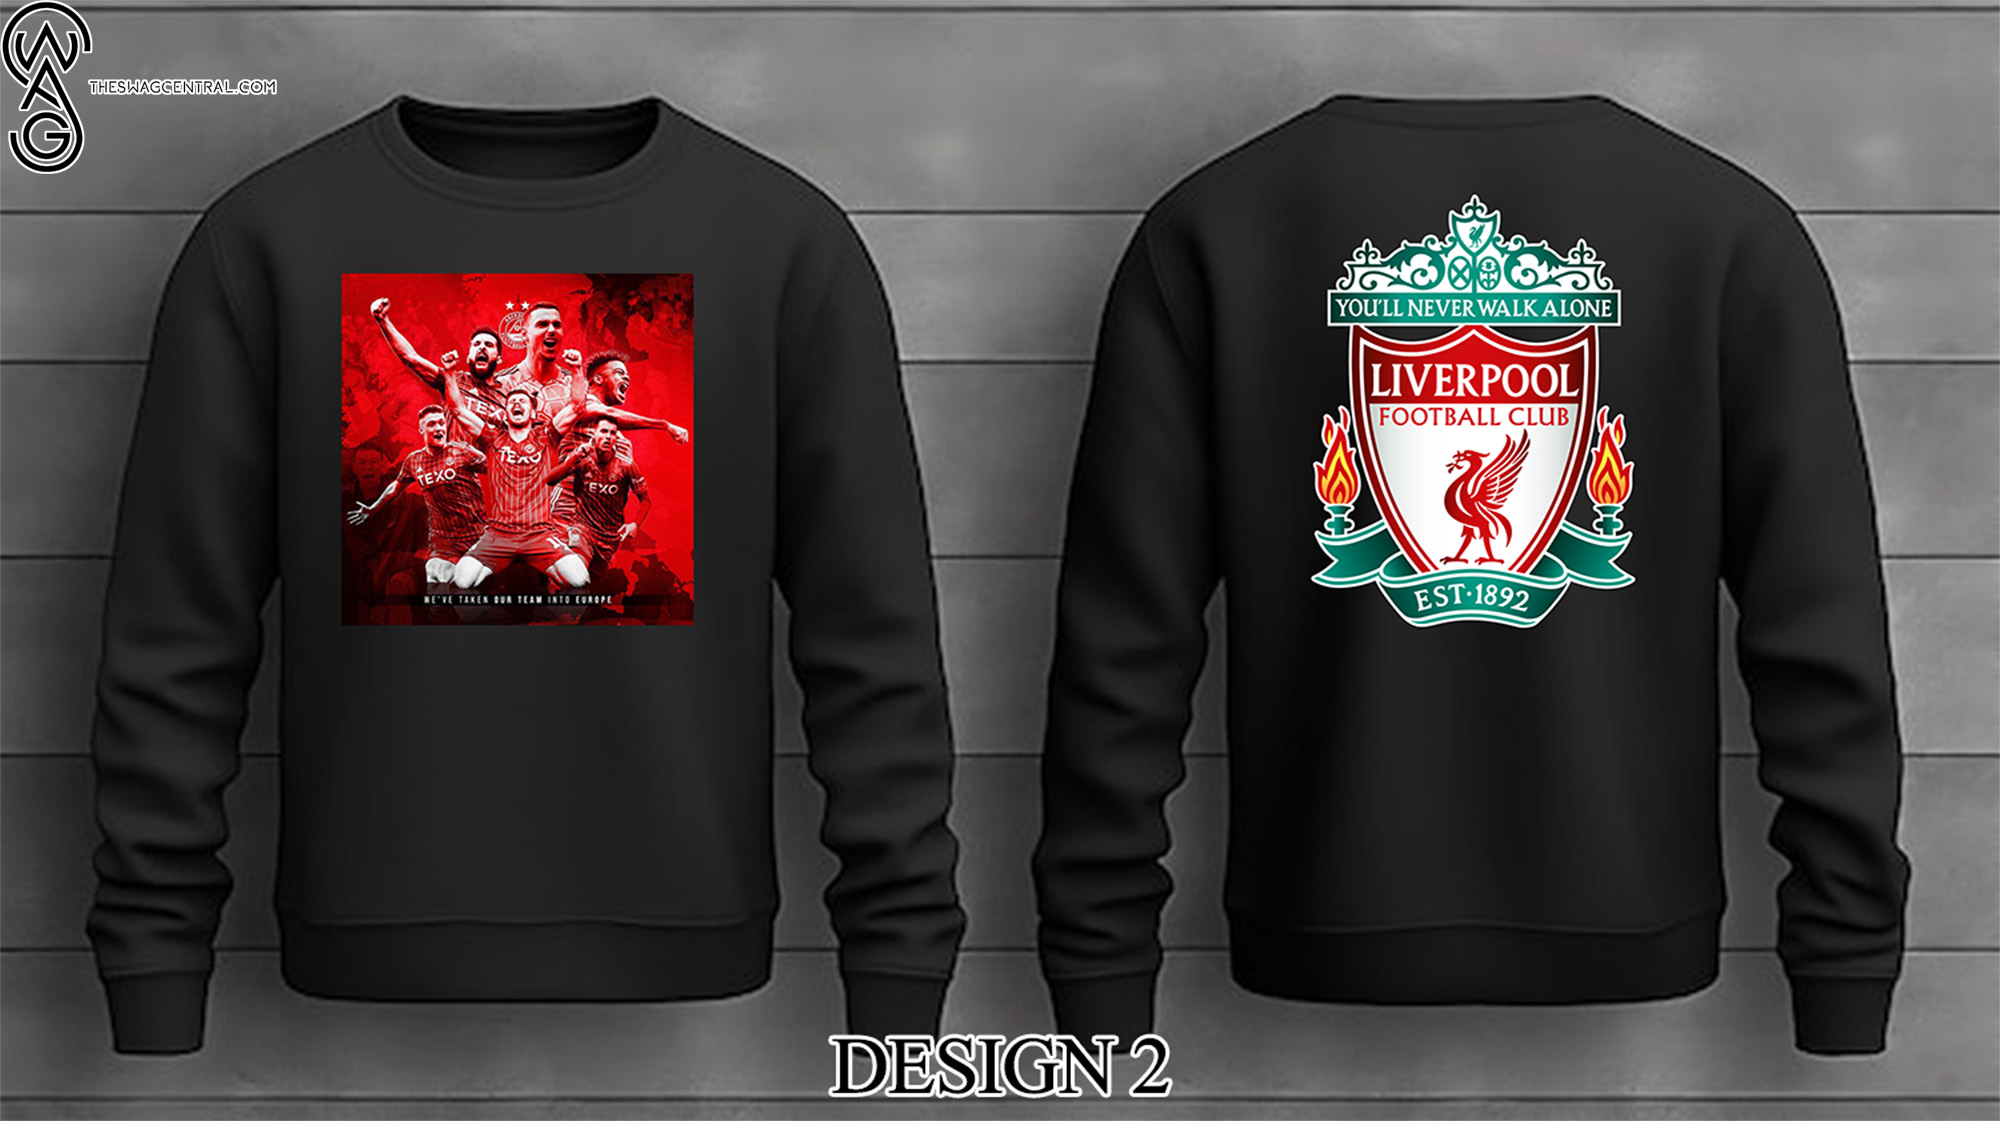 UEFA Europa League Liverpool Football Club Shirt